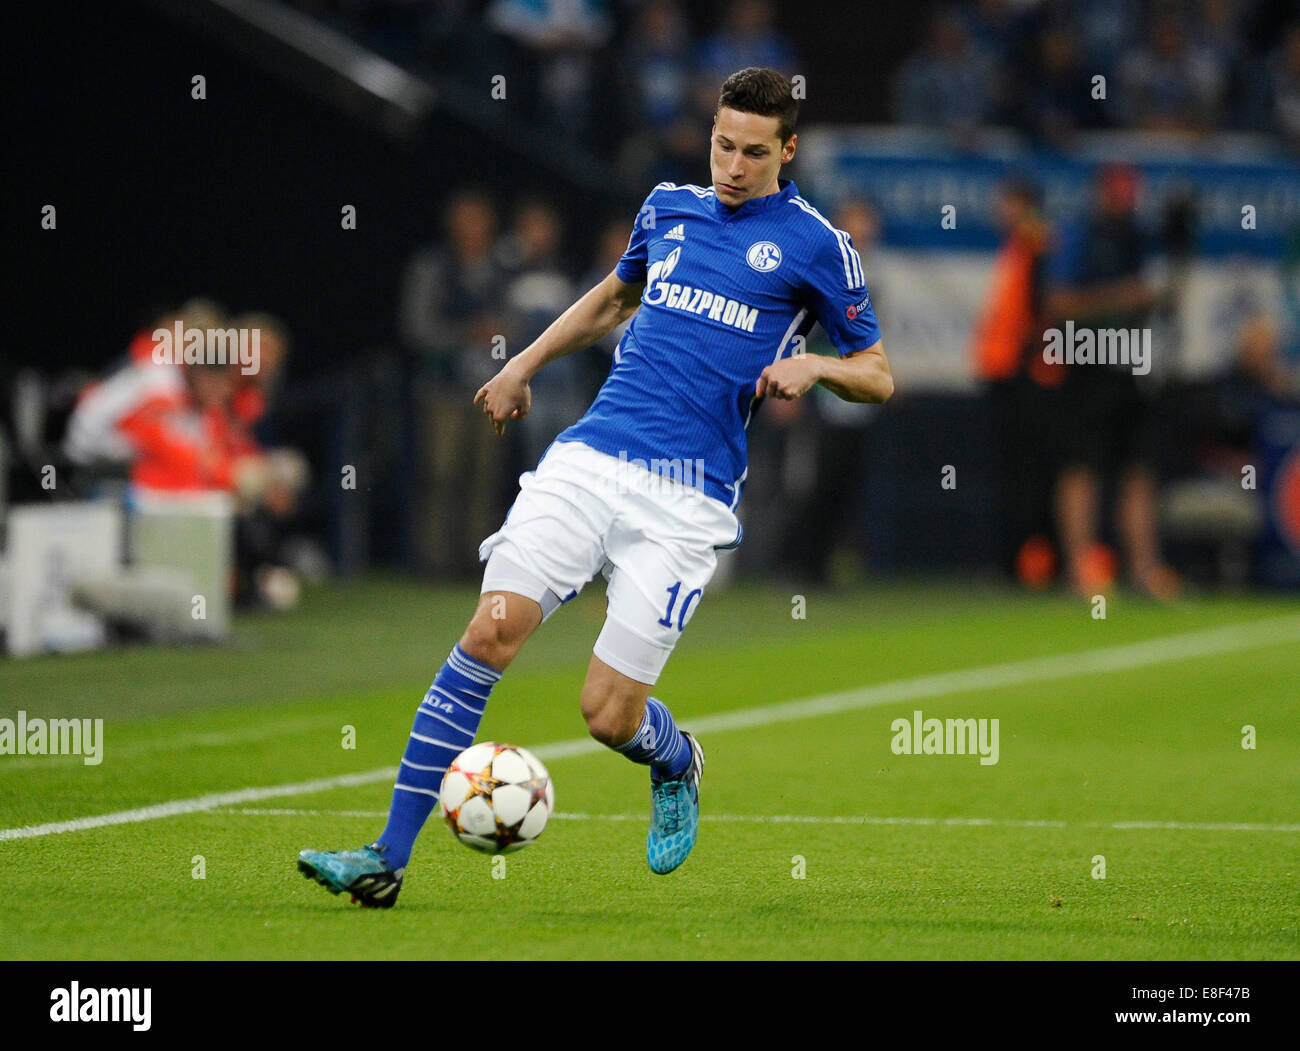 Gelsenkirchen, Germany 30.9.2014, Champions League 14/15 Group stage, Schalke 04 - NK Maribor - Julian Draxler (S04) Stock Photo